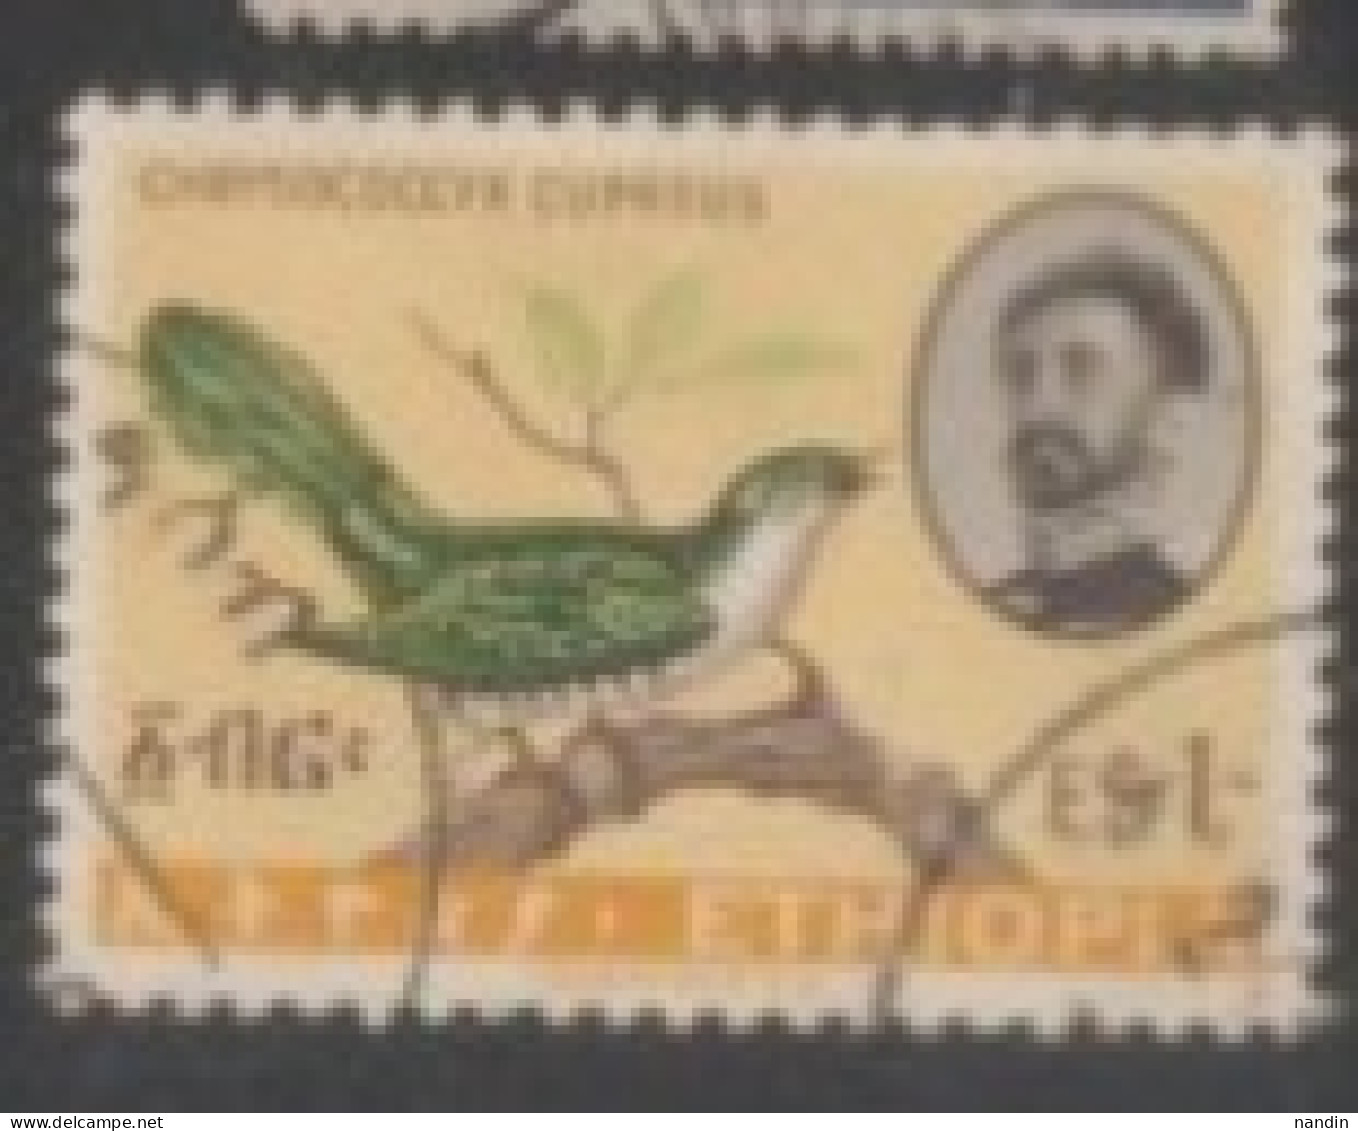 1962 ETHIOPIA USED STAMP ON BIRD/Chrysococcyx Caprius-Diederik Cuckoo - Coucous, Touracos